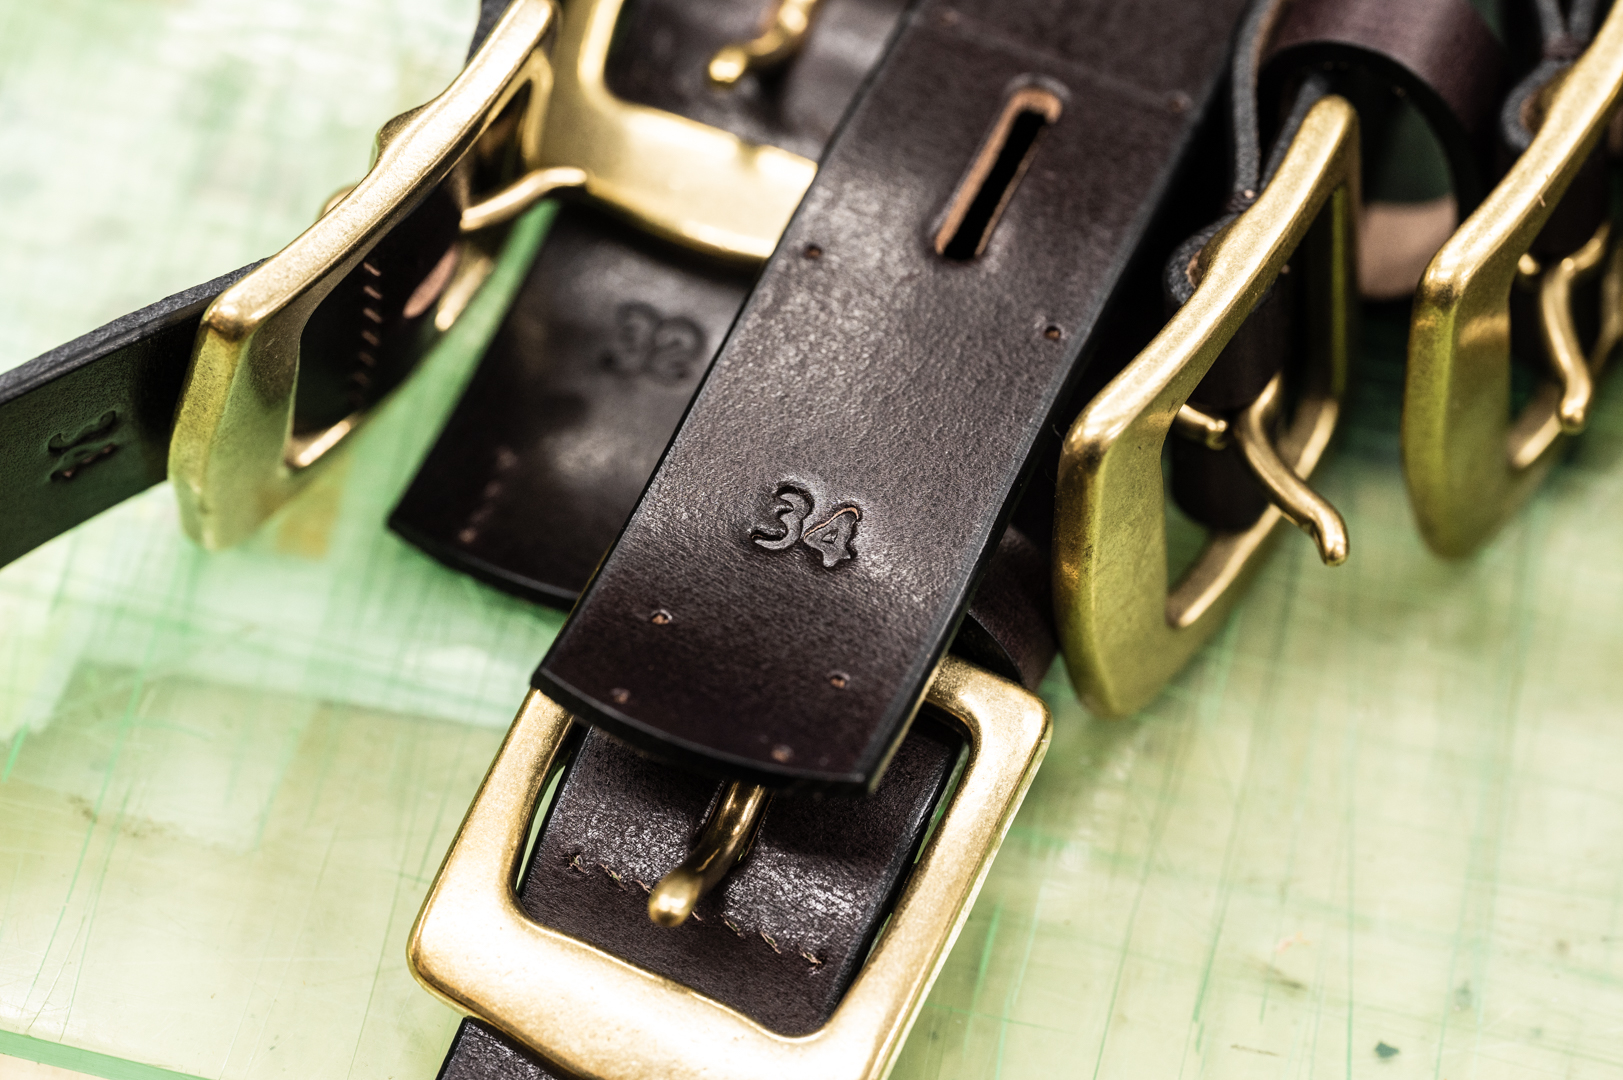 Leather Belt black